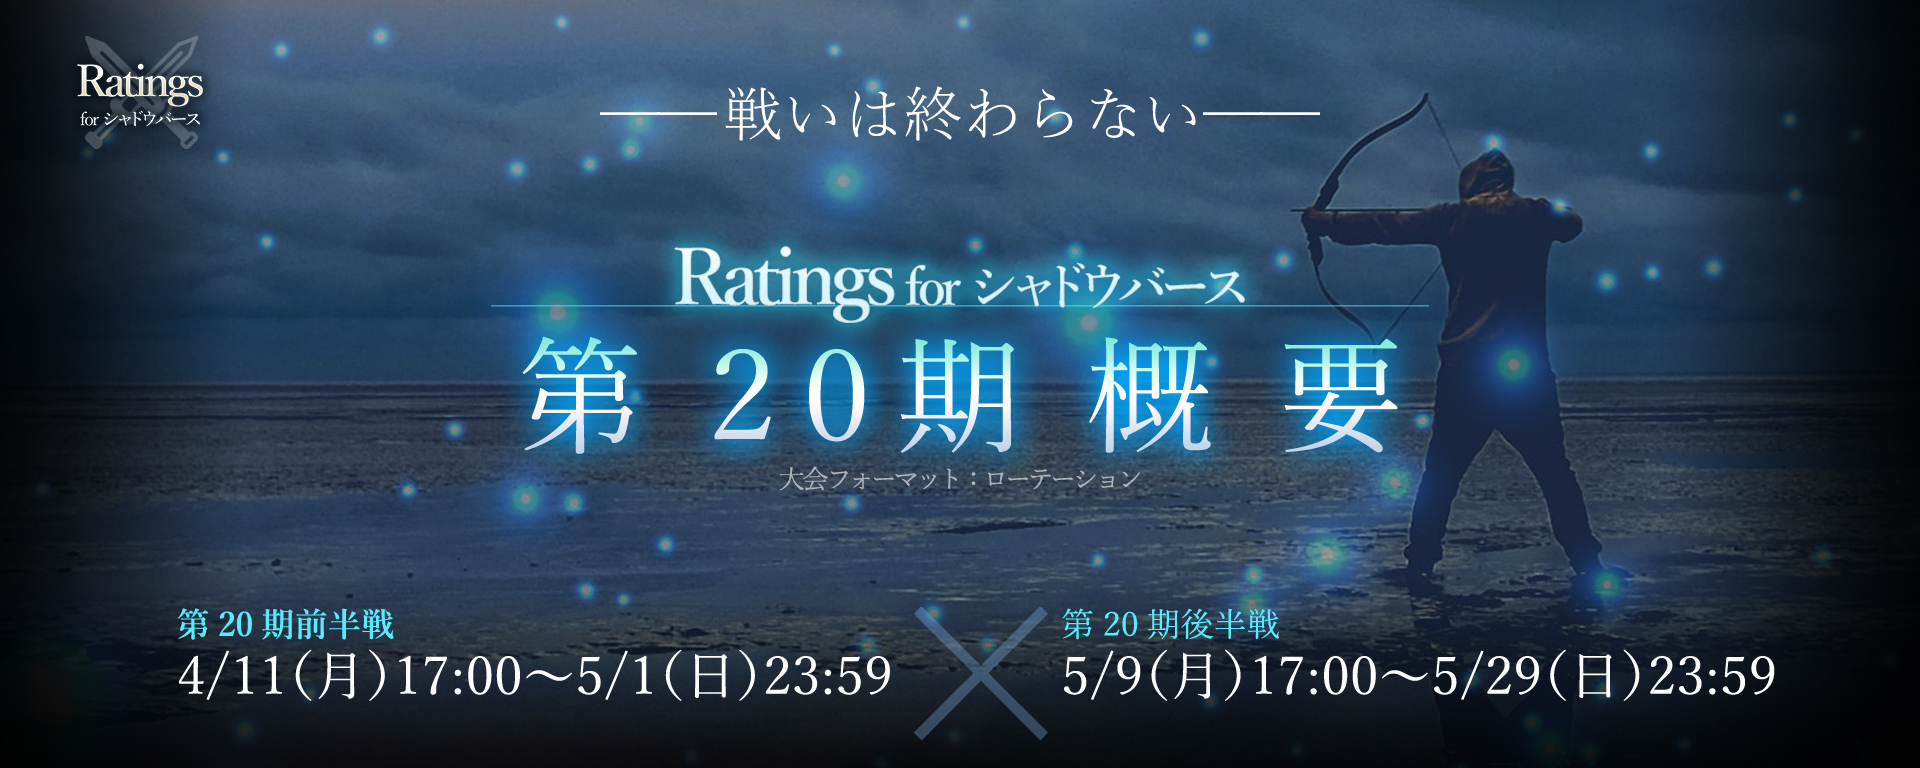 Ratings for シャドウ バース